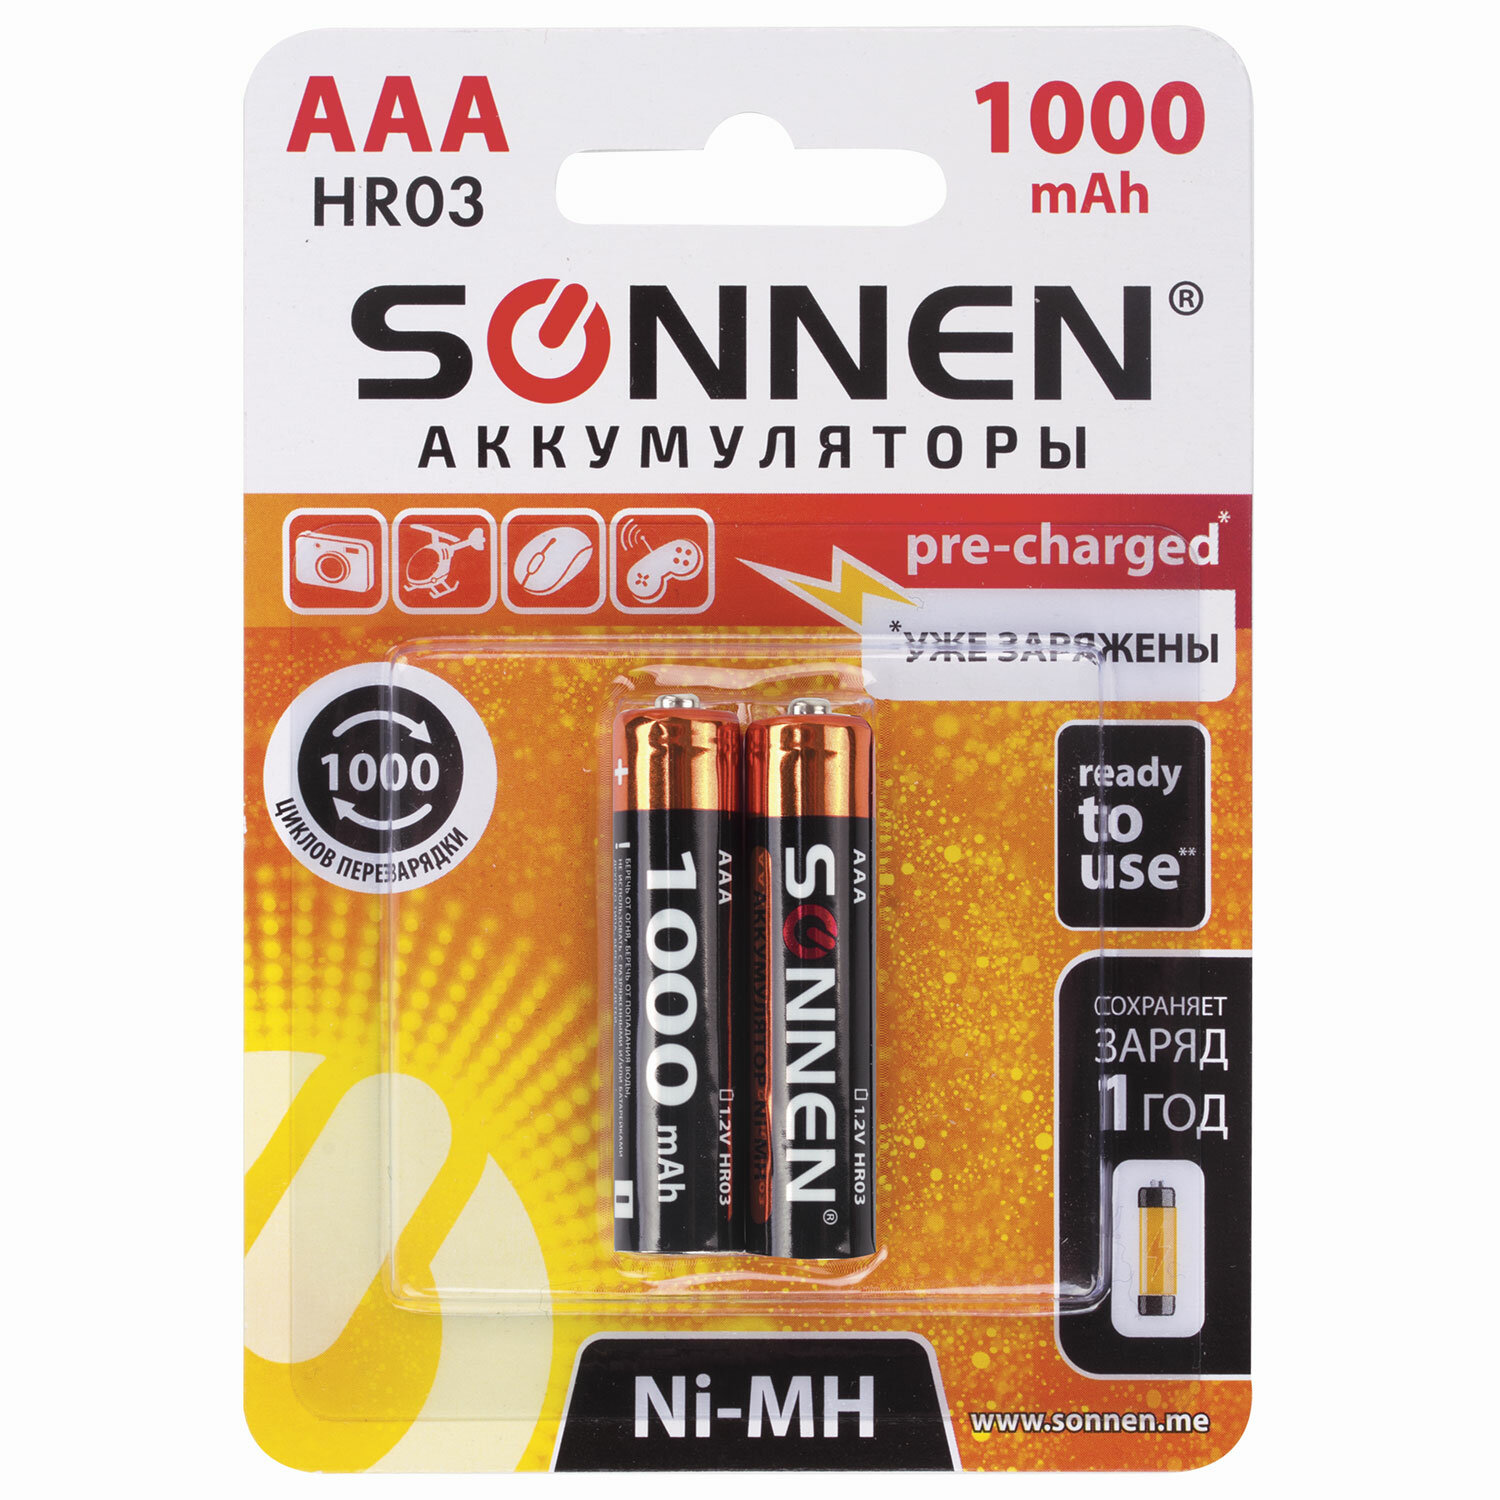 Sonnen Батарейки аккумуляторные 2 шт., SONNEN 454237, AAA (HR03), Ni-Mh, 1000 mAh